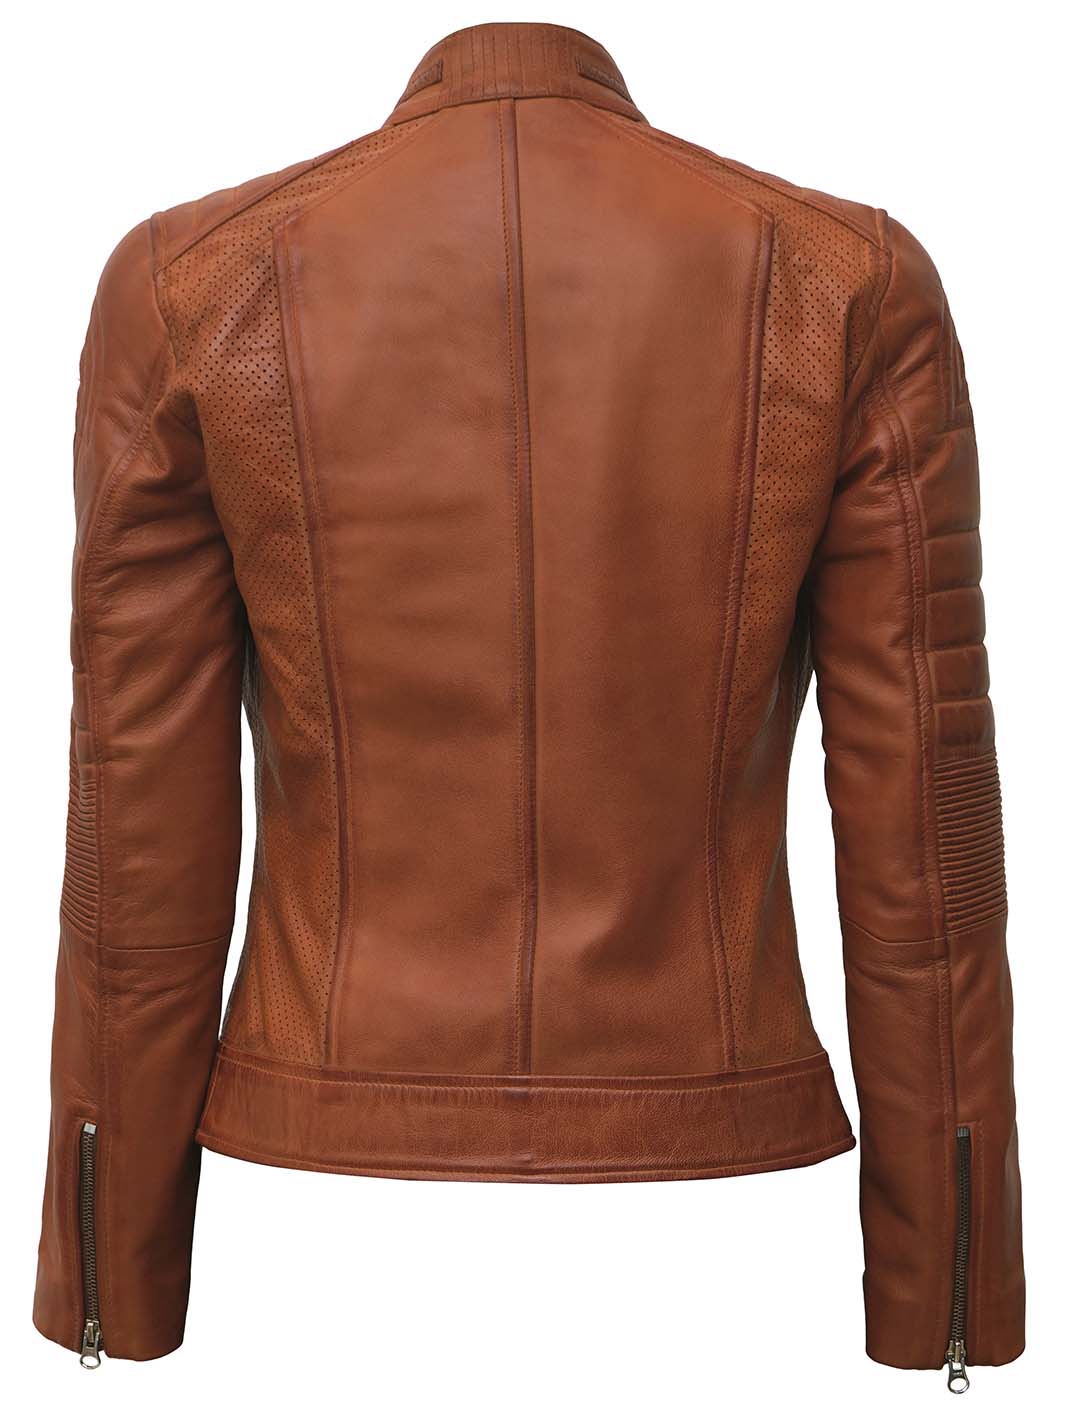 Austin Tan Women's Leather Jacket